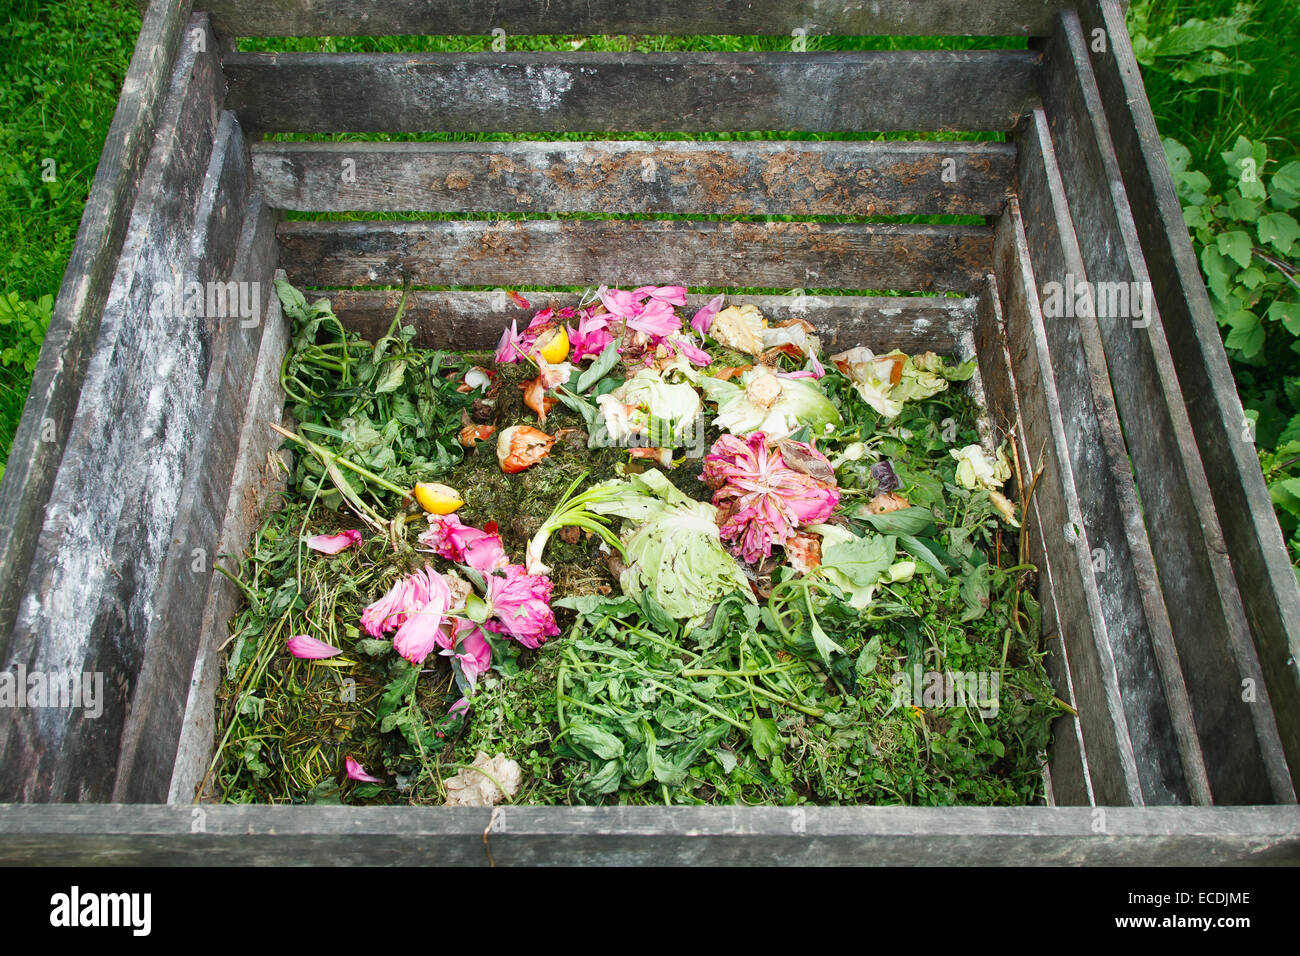 Compost bin in the garden Stock Photo